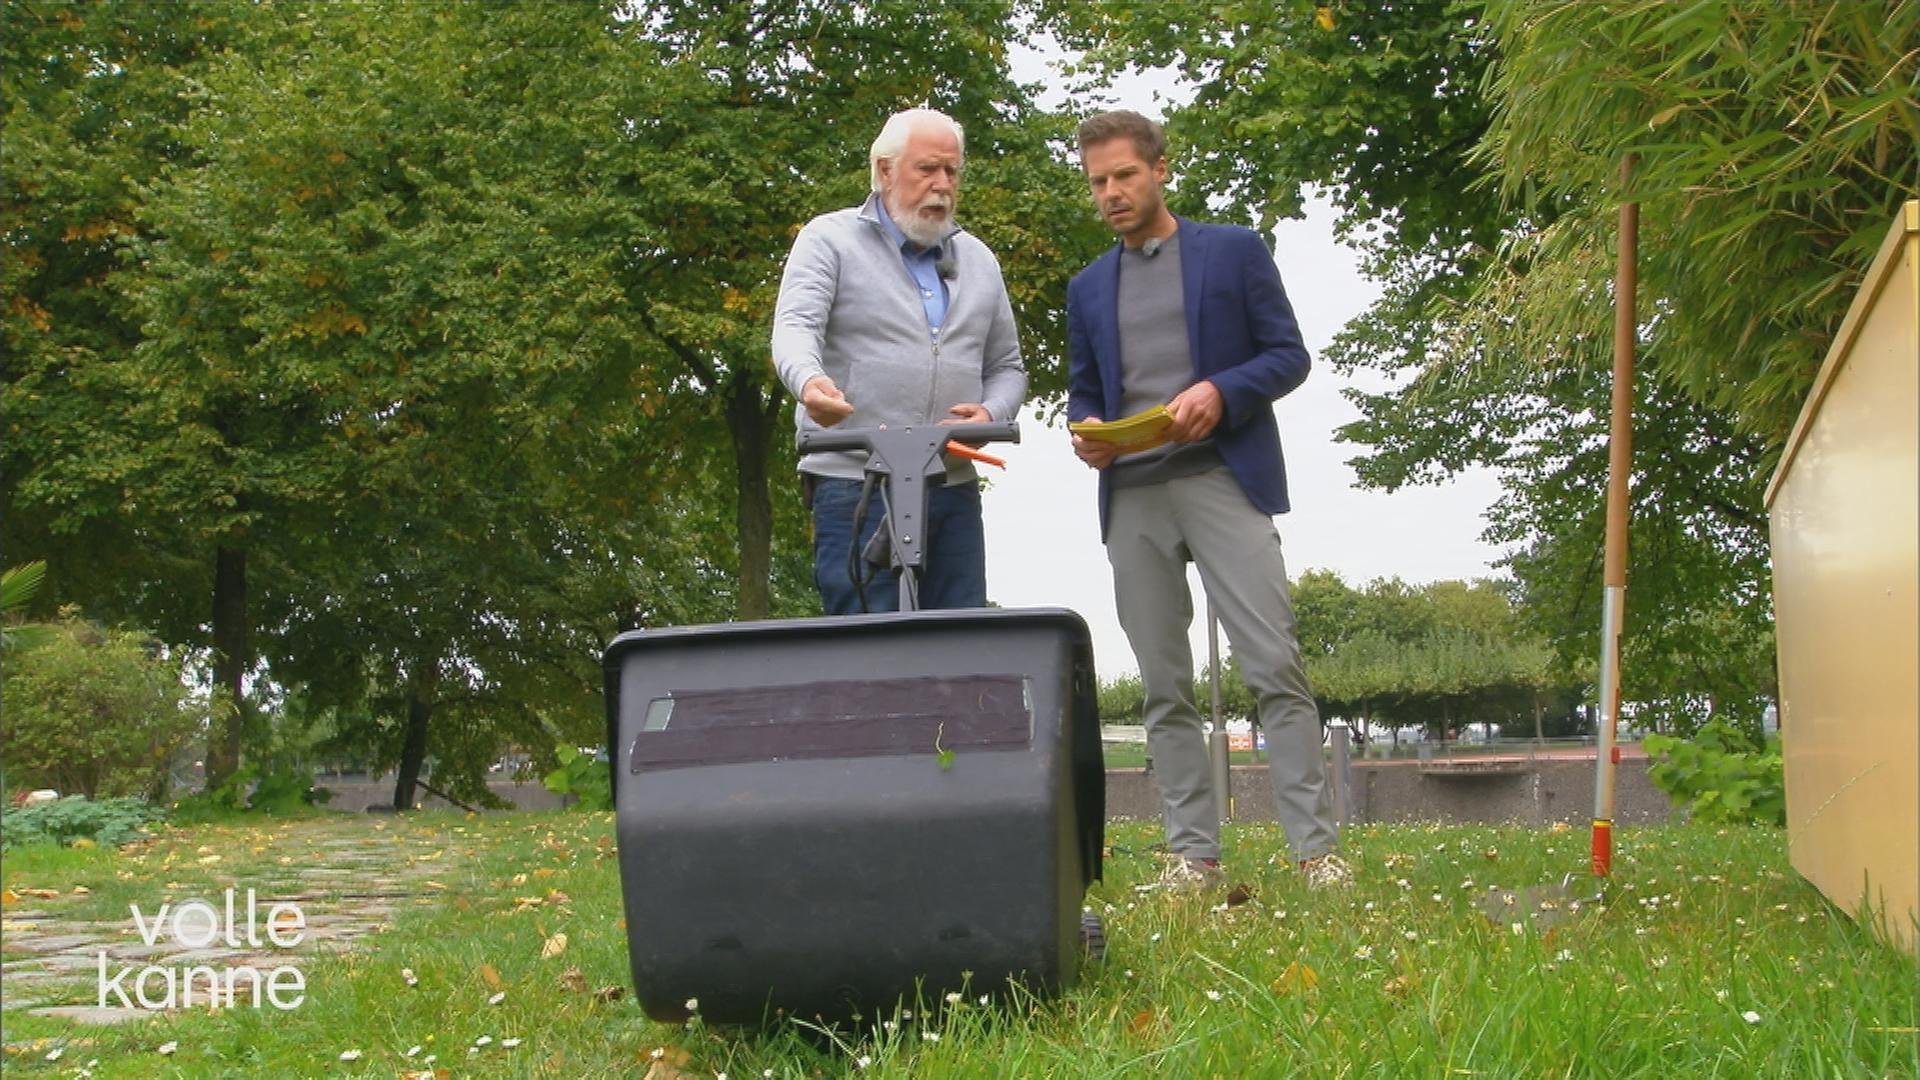 Elamr Mai & Florian Weiss stehen im Volle-Kanne-Garten